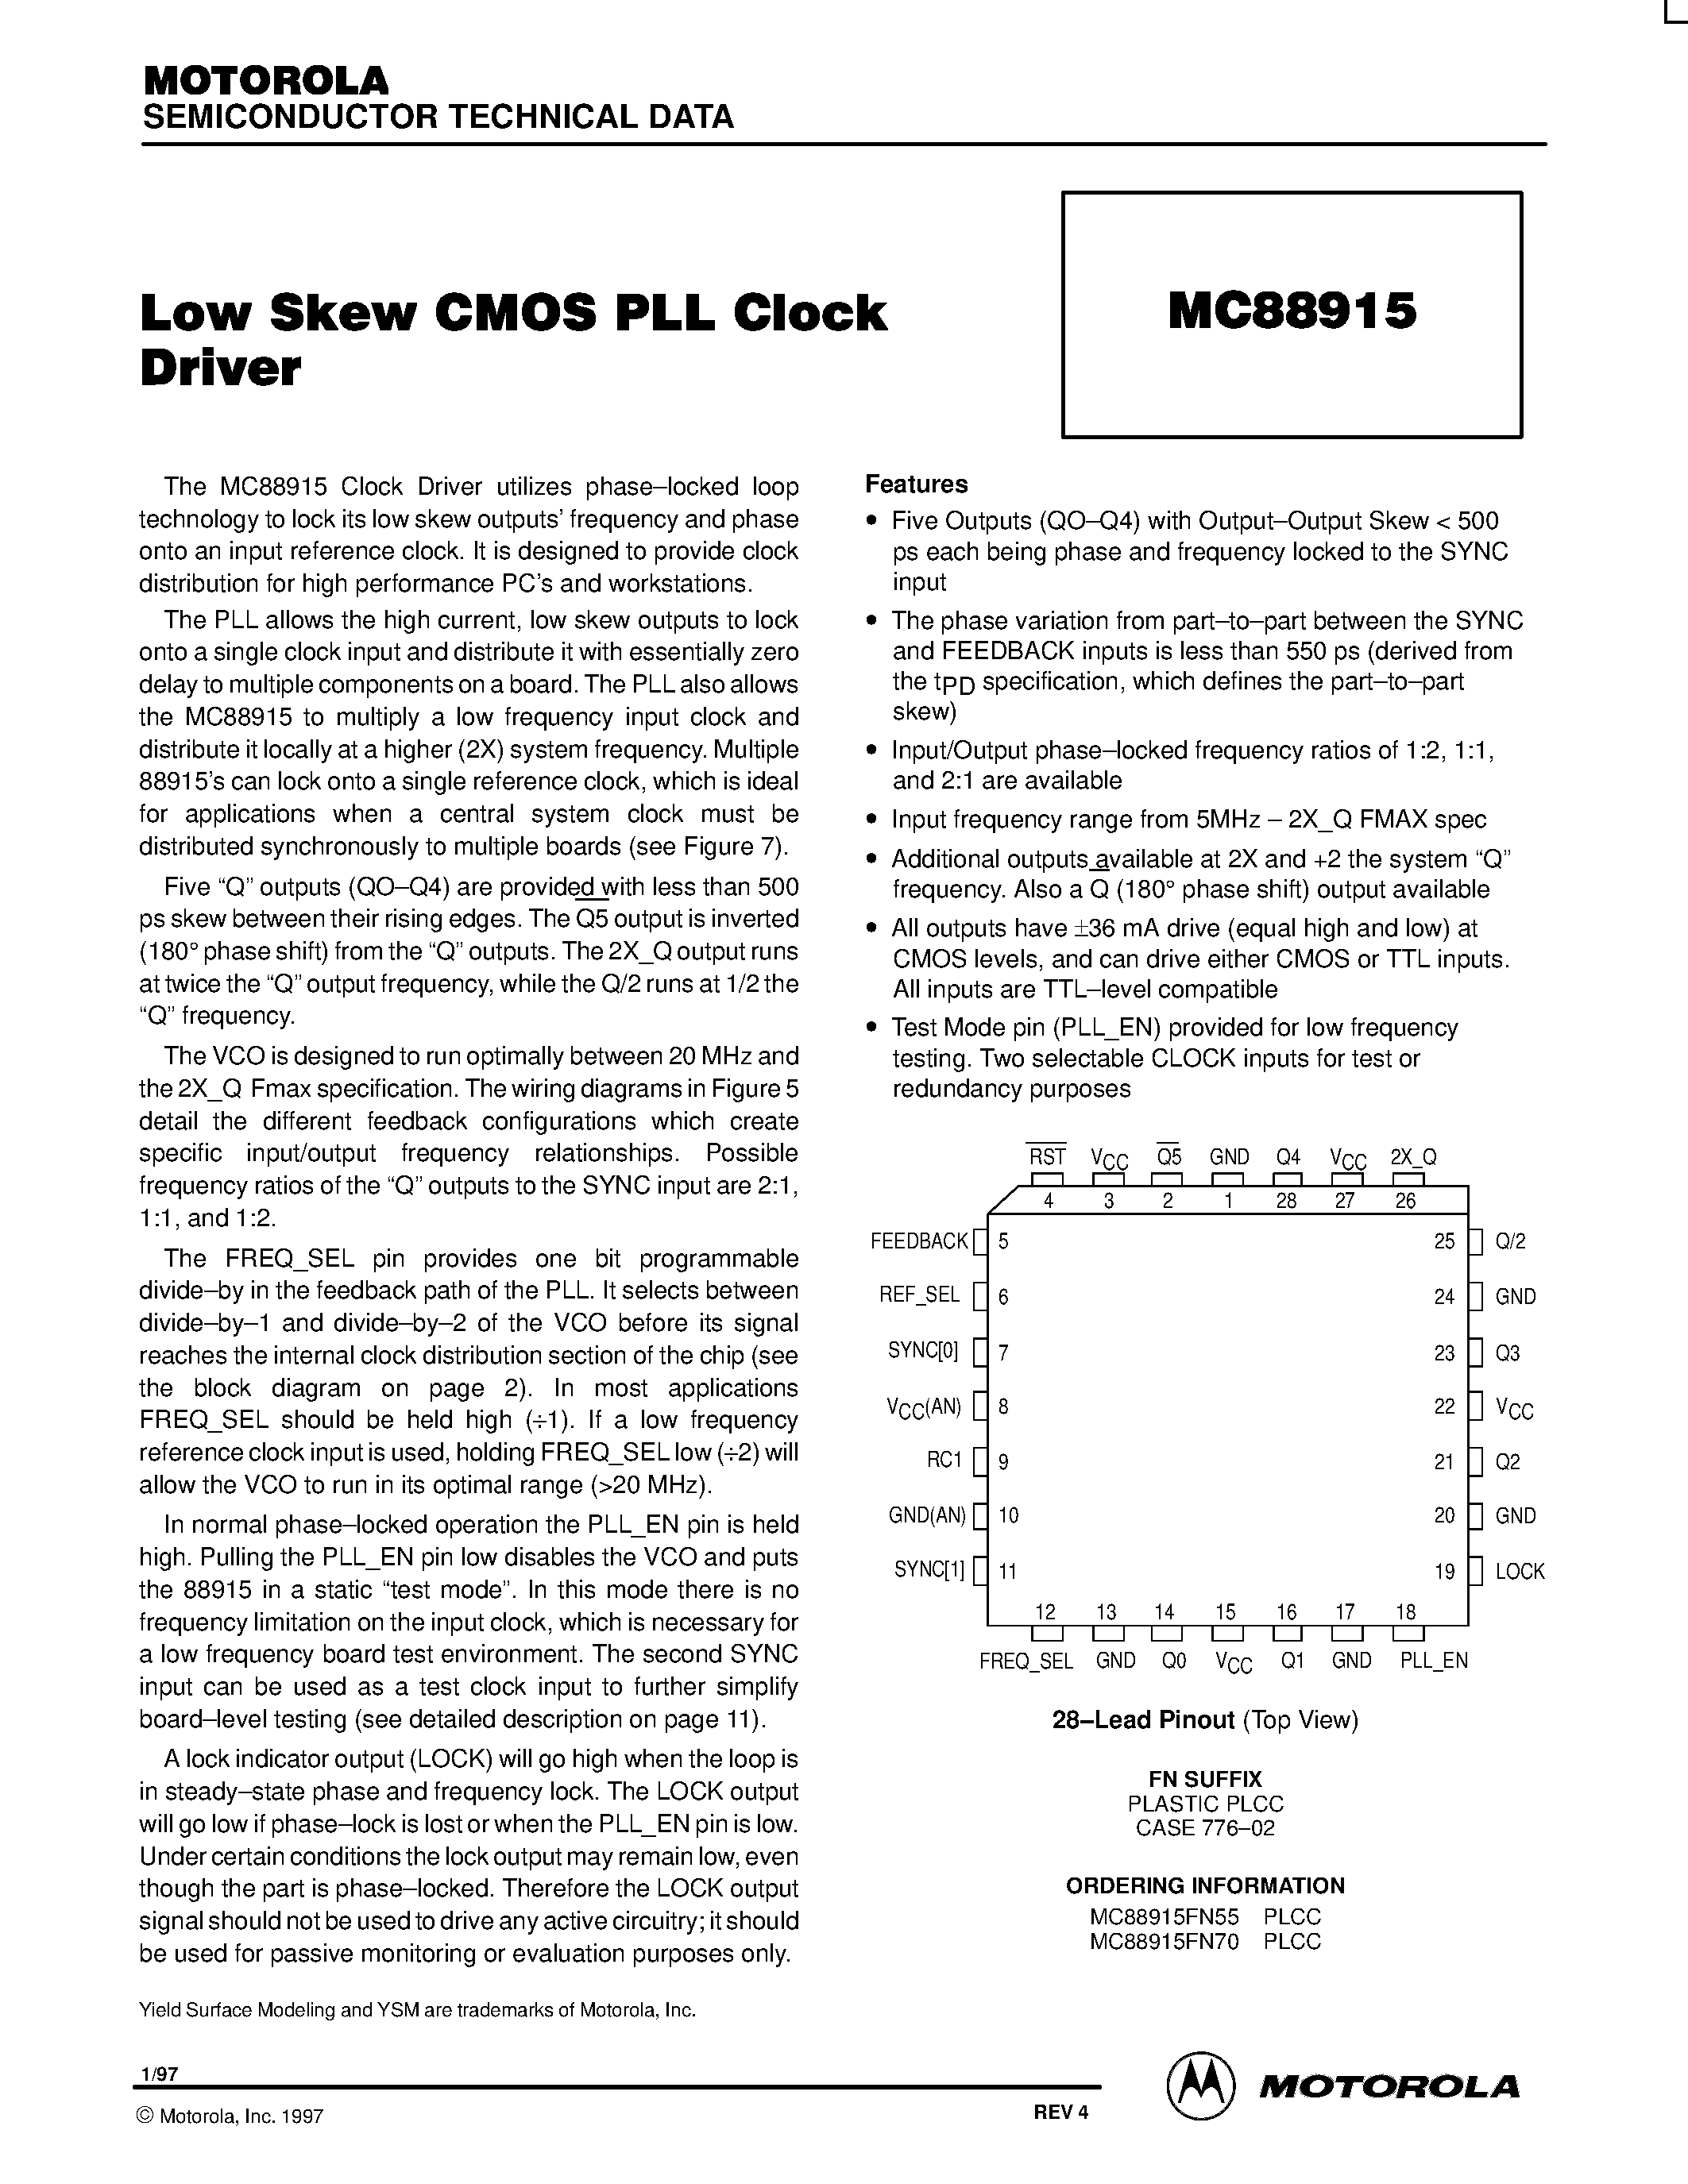 Datasheet MC88915FN70PLCC - Low Skew CMOS PLL Clock Driver page 1